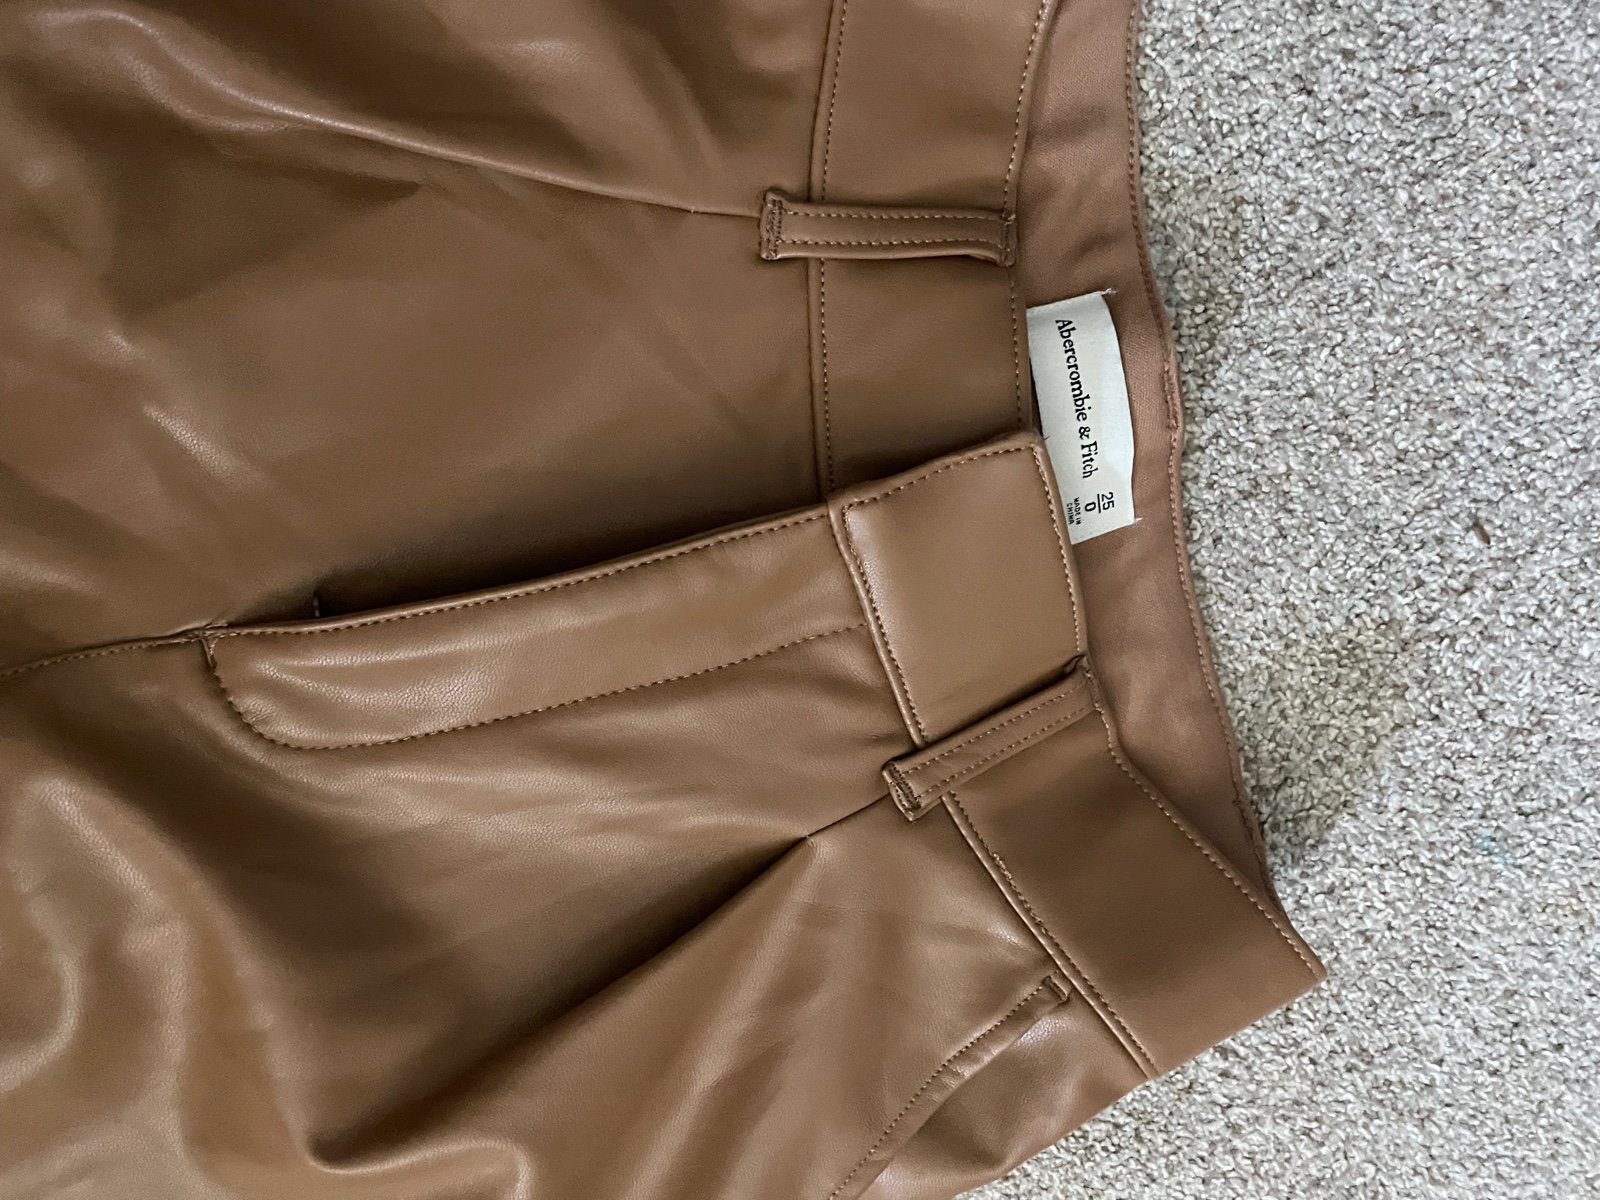 reasonable price Abercrombie leather pants gtGClgaj9 Fa